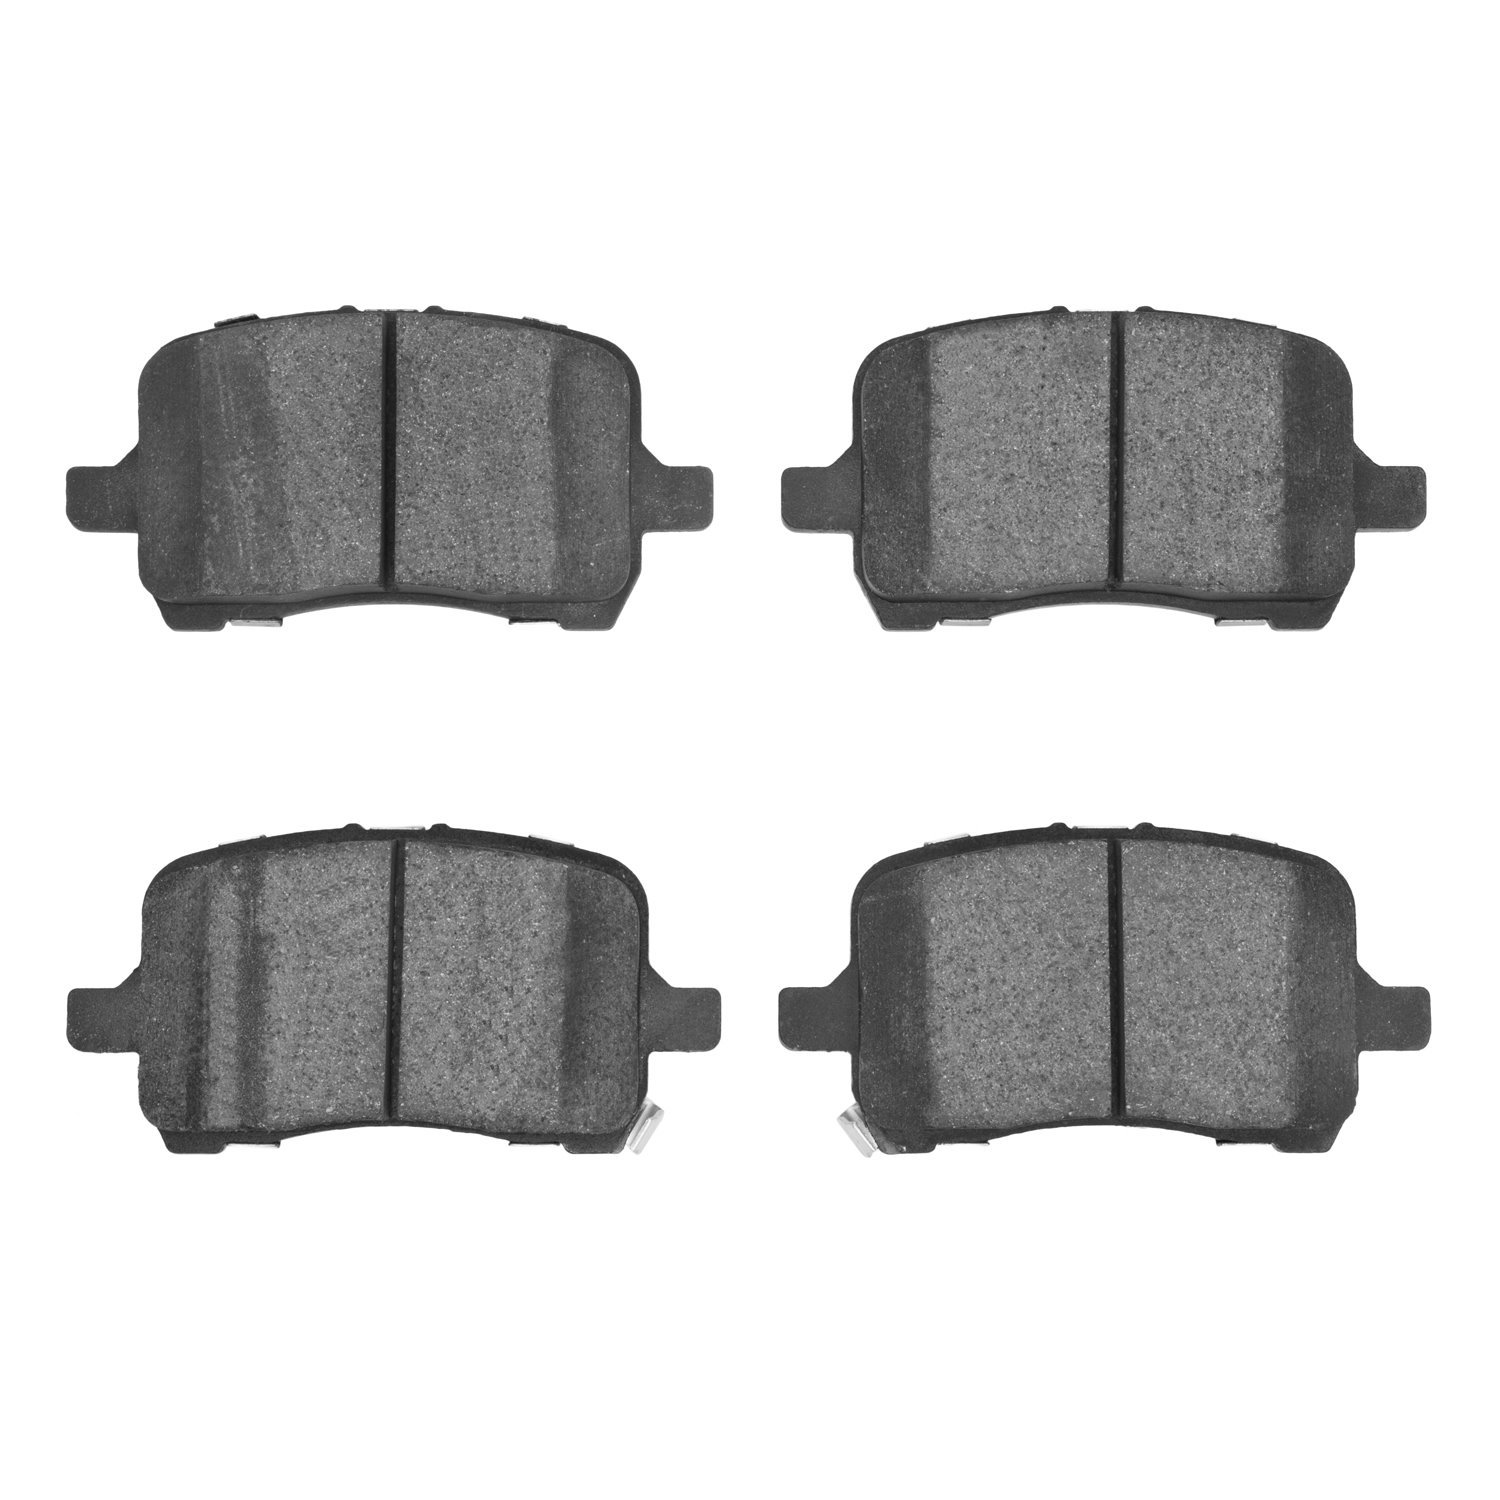 1552-1028-00 5000 Advanced Ceramic Brake Pads, 2004-2012 GM, Position: Front